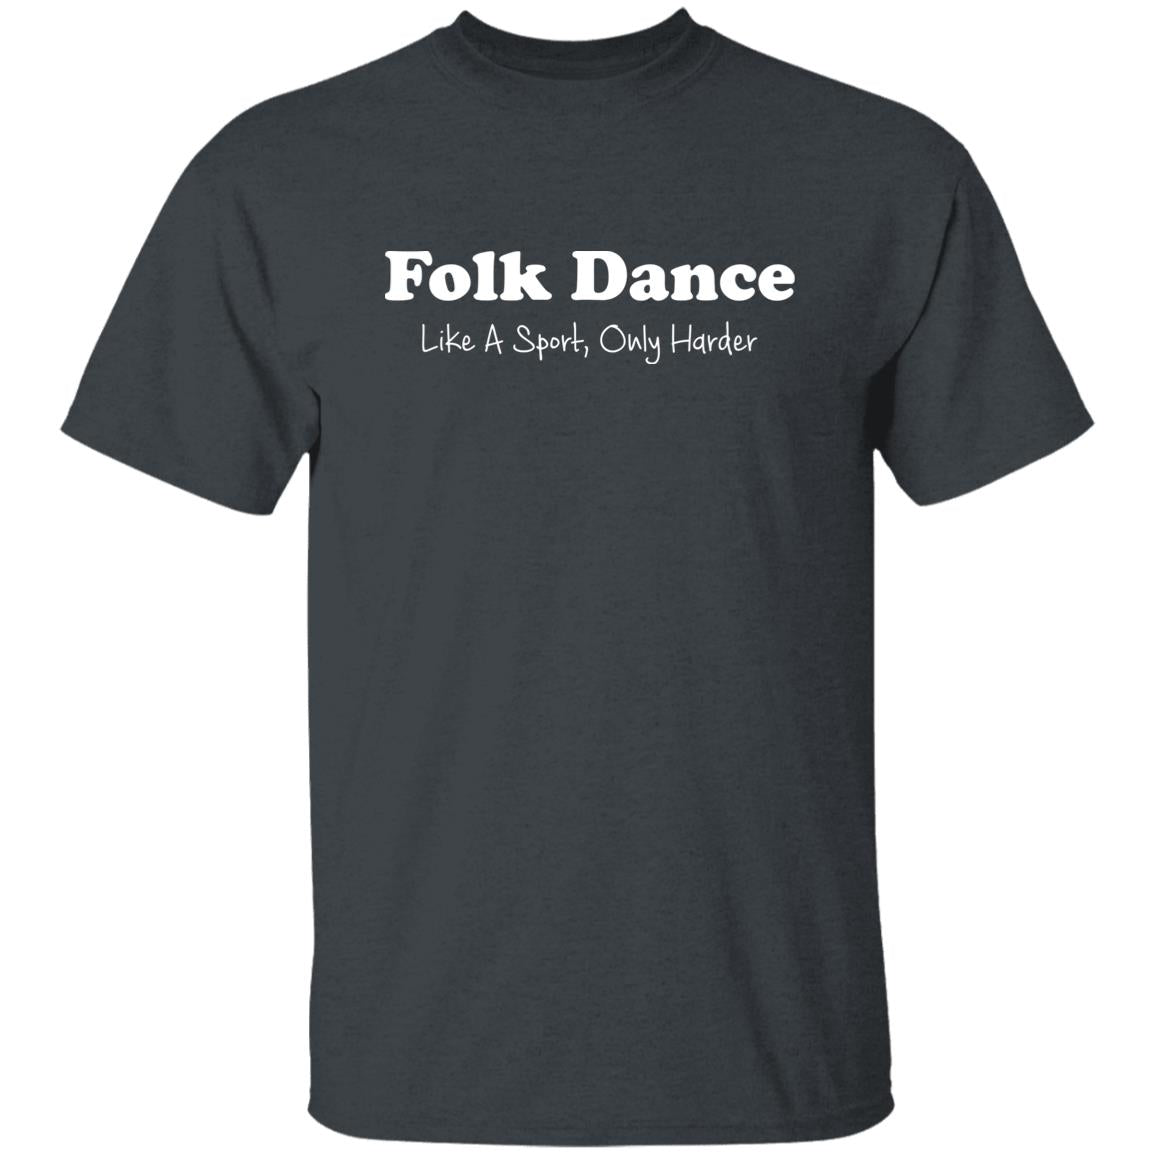 Folk Dance like a sport only harder Unisex Shirt S-2XL Dark Heather-Dark Heather-Family-Gift-Planet